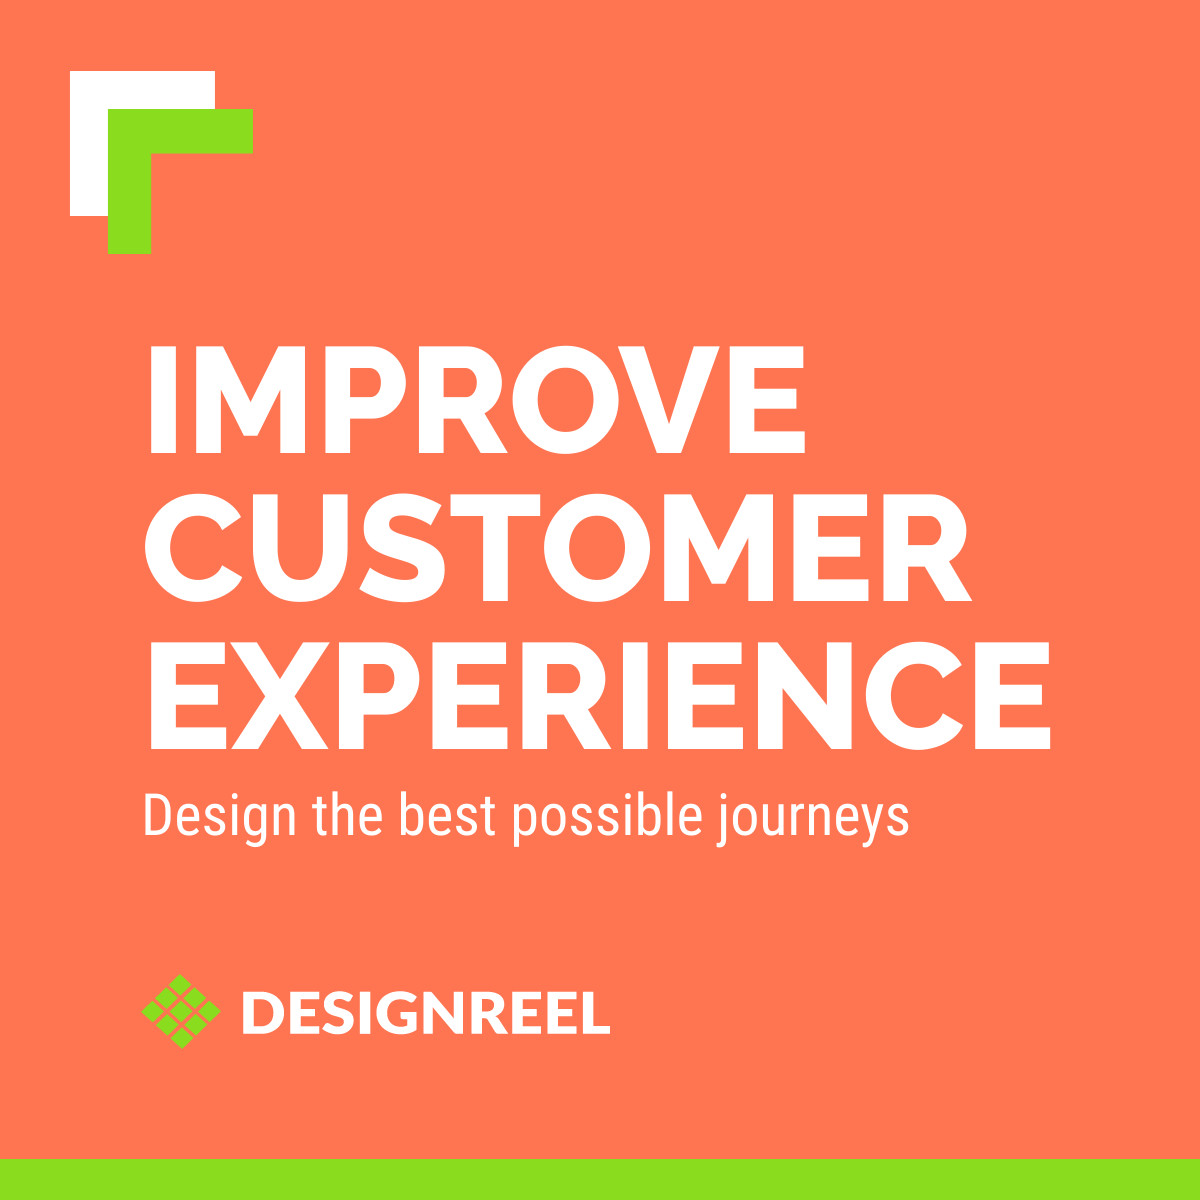 Improve Customer Experience 